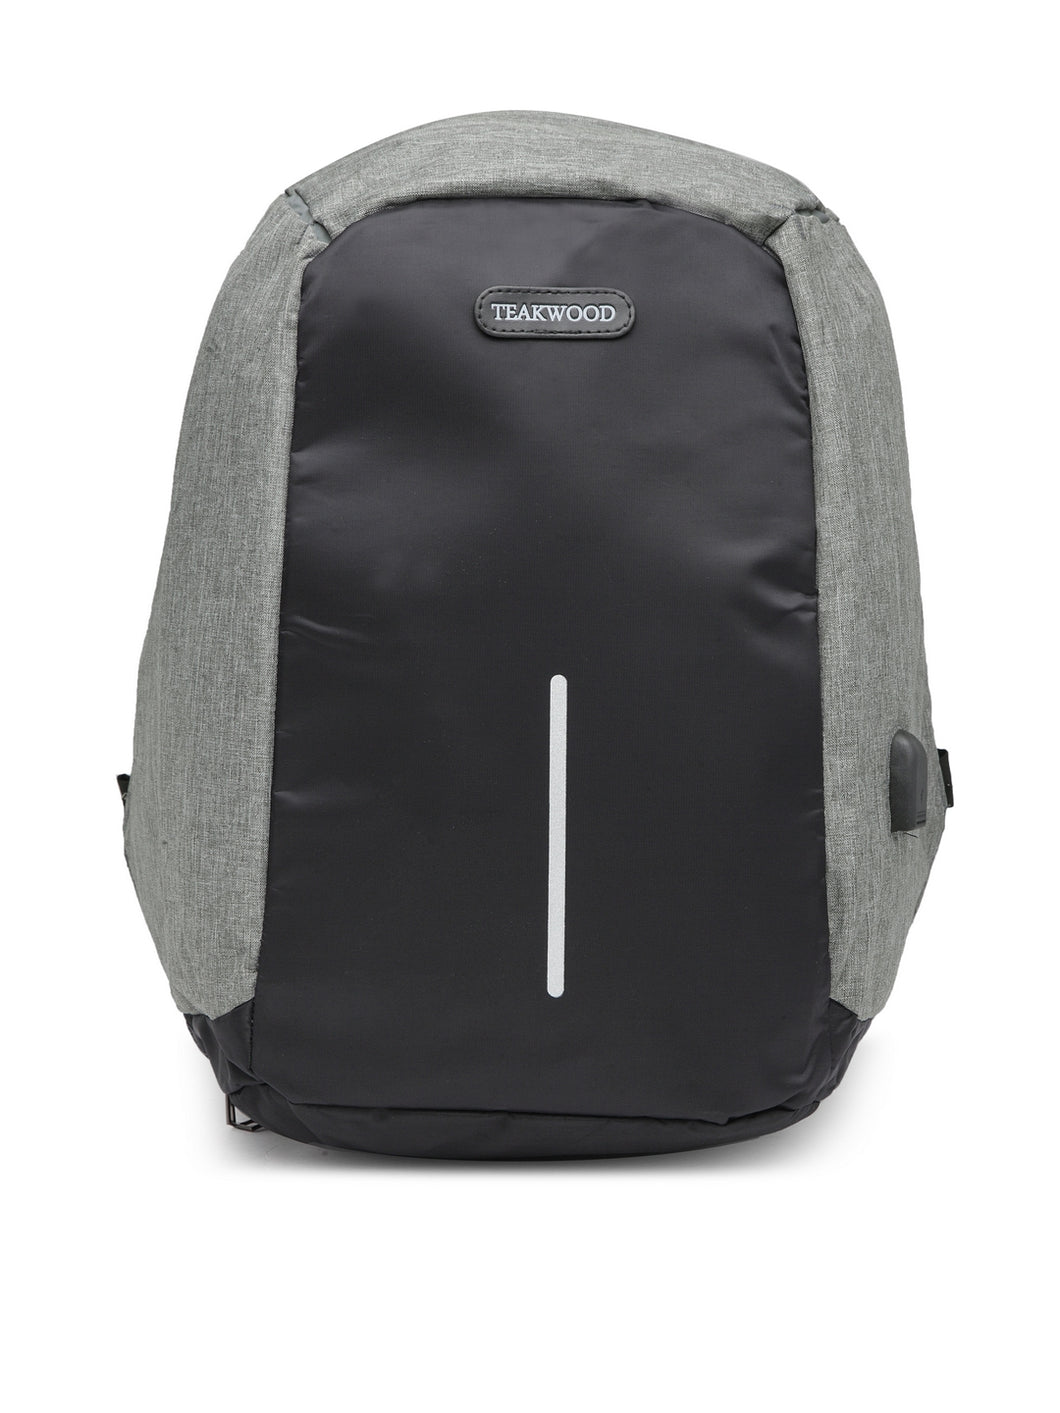 Teakwood Leathers Unisex Grey Colourblocked Backpack